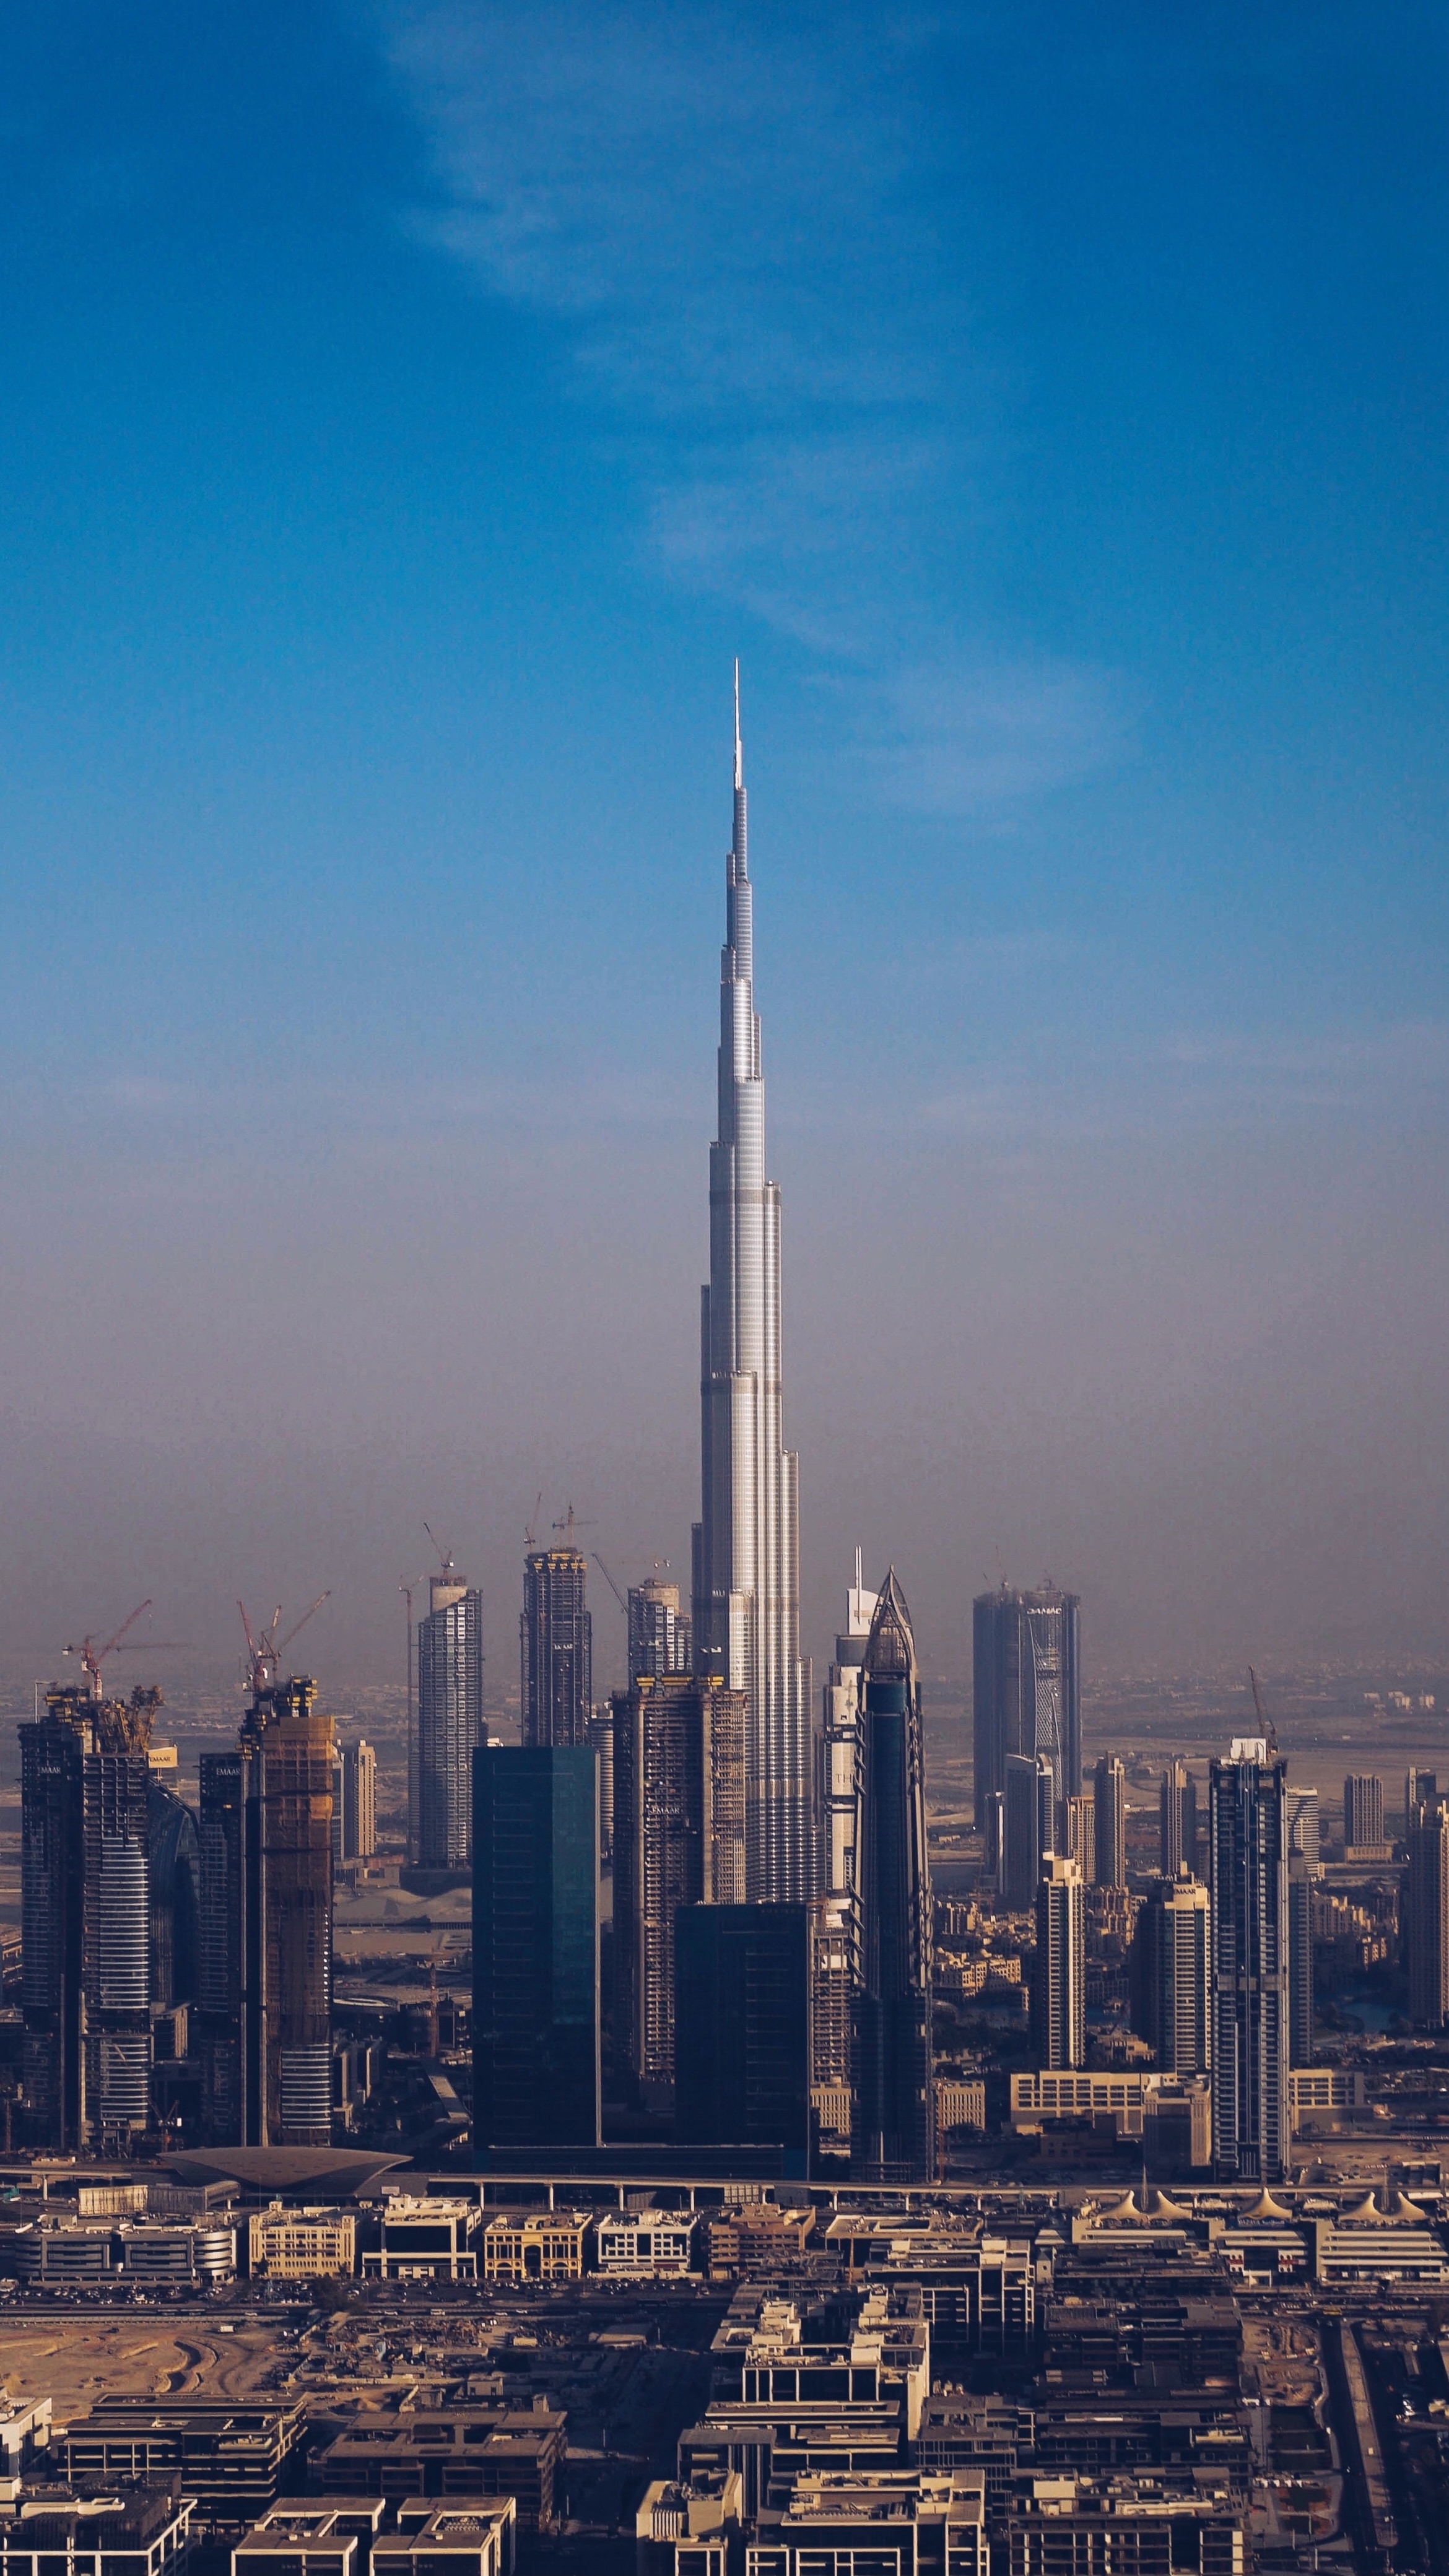 Dubai Burj Khalifa - tallest building